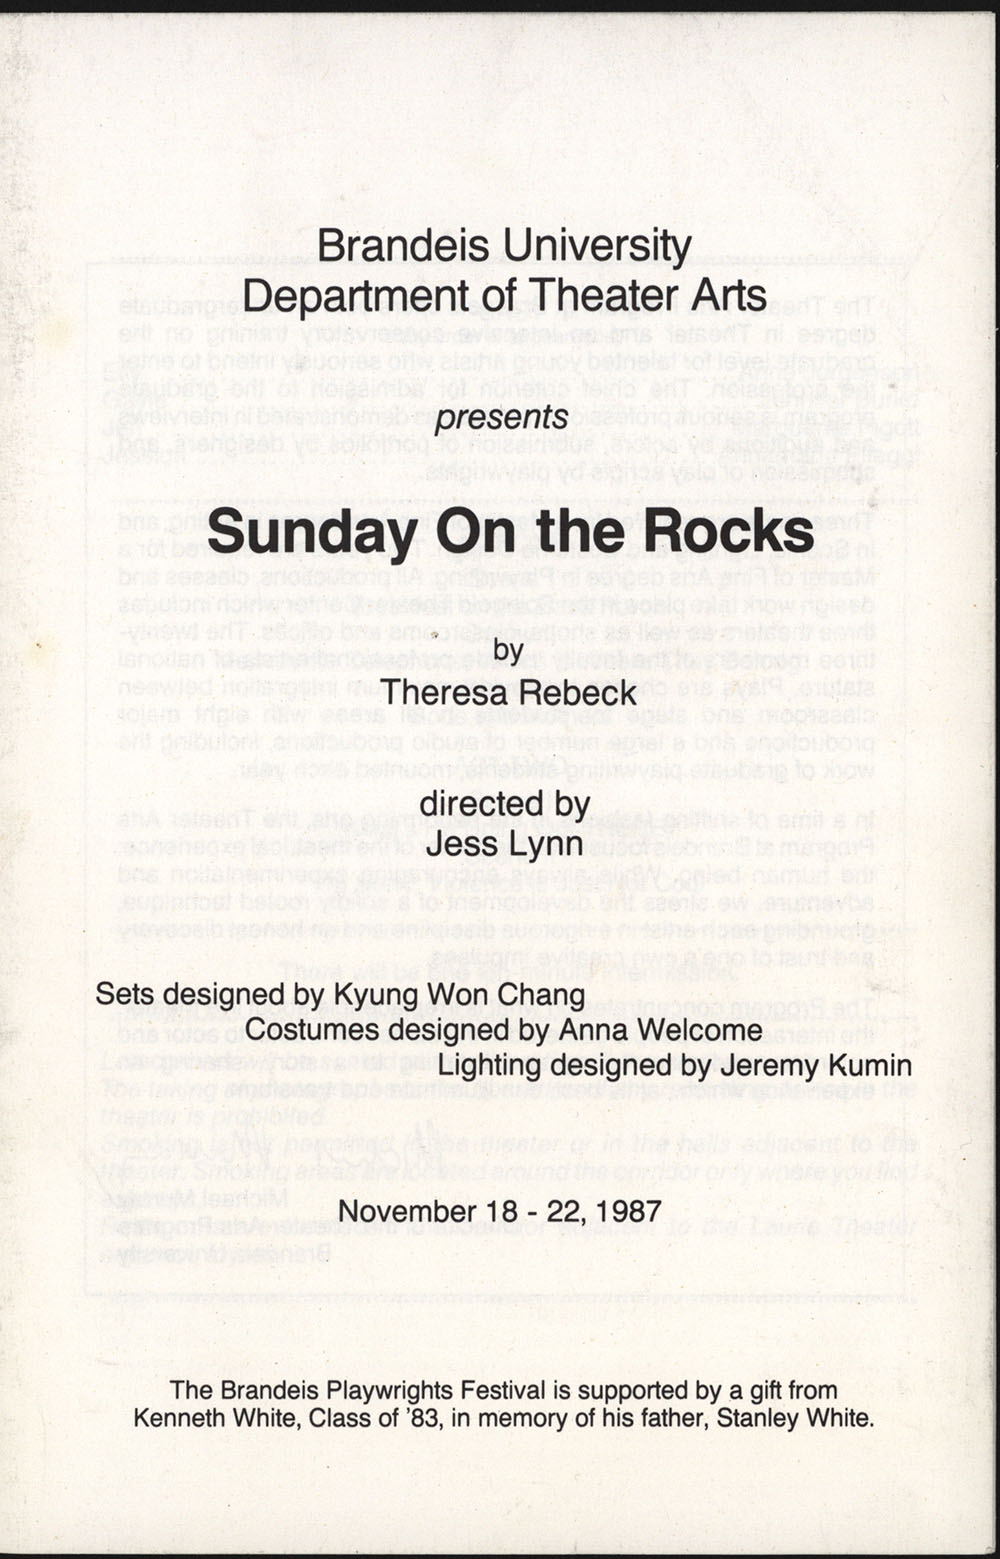 Sunday on the Rocks (program), Brandeis University Department of Theater Arts, November 18-22, 1987